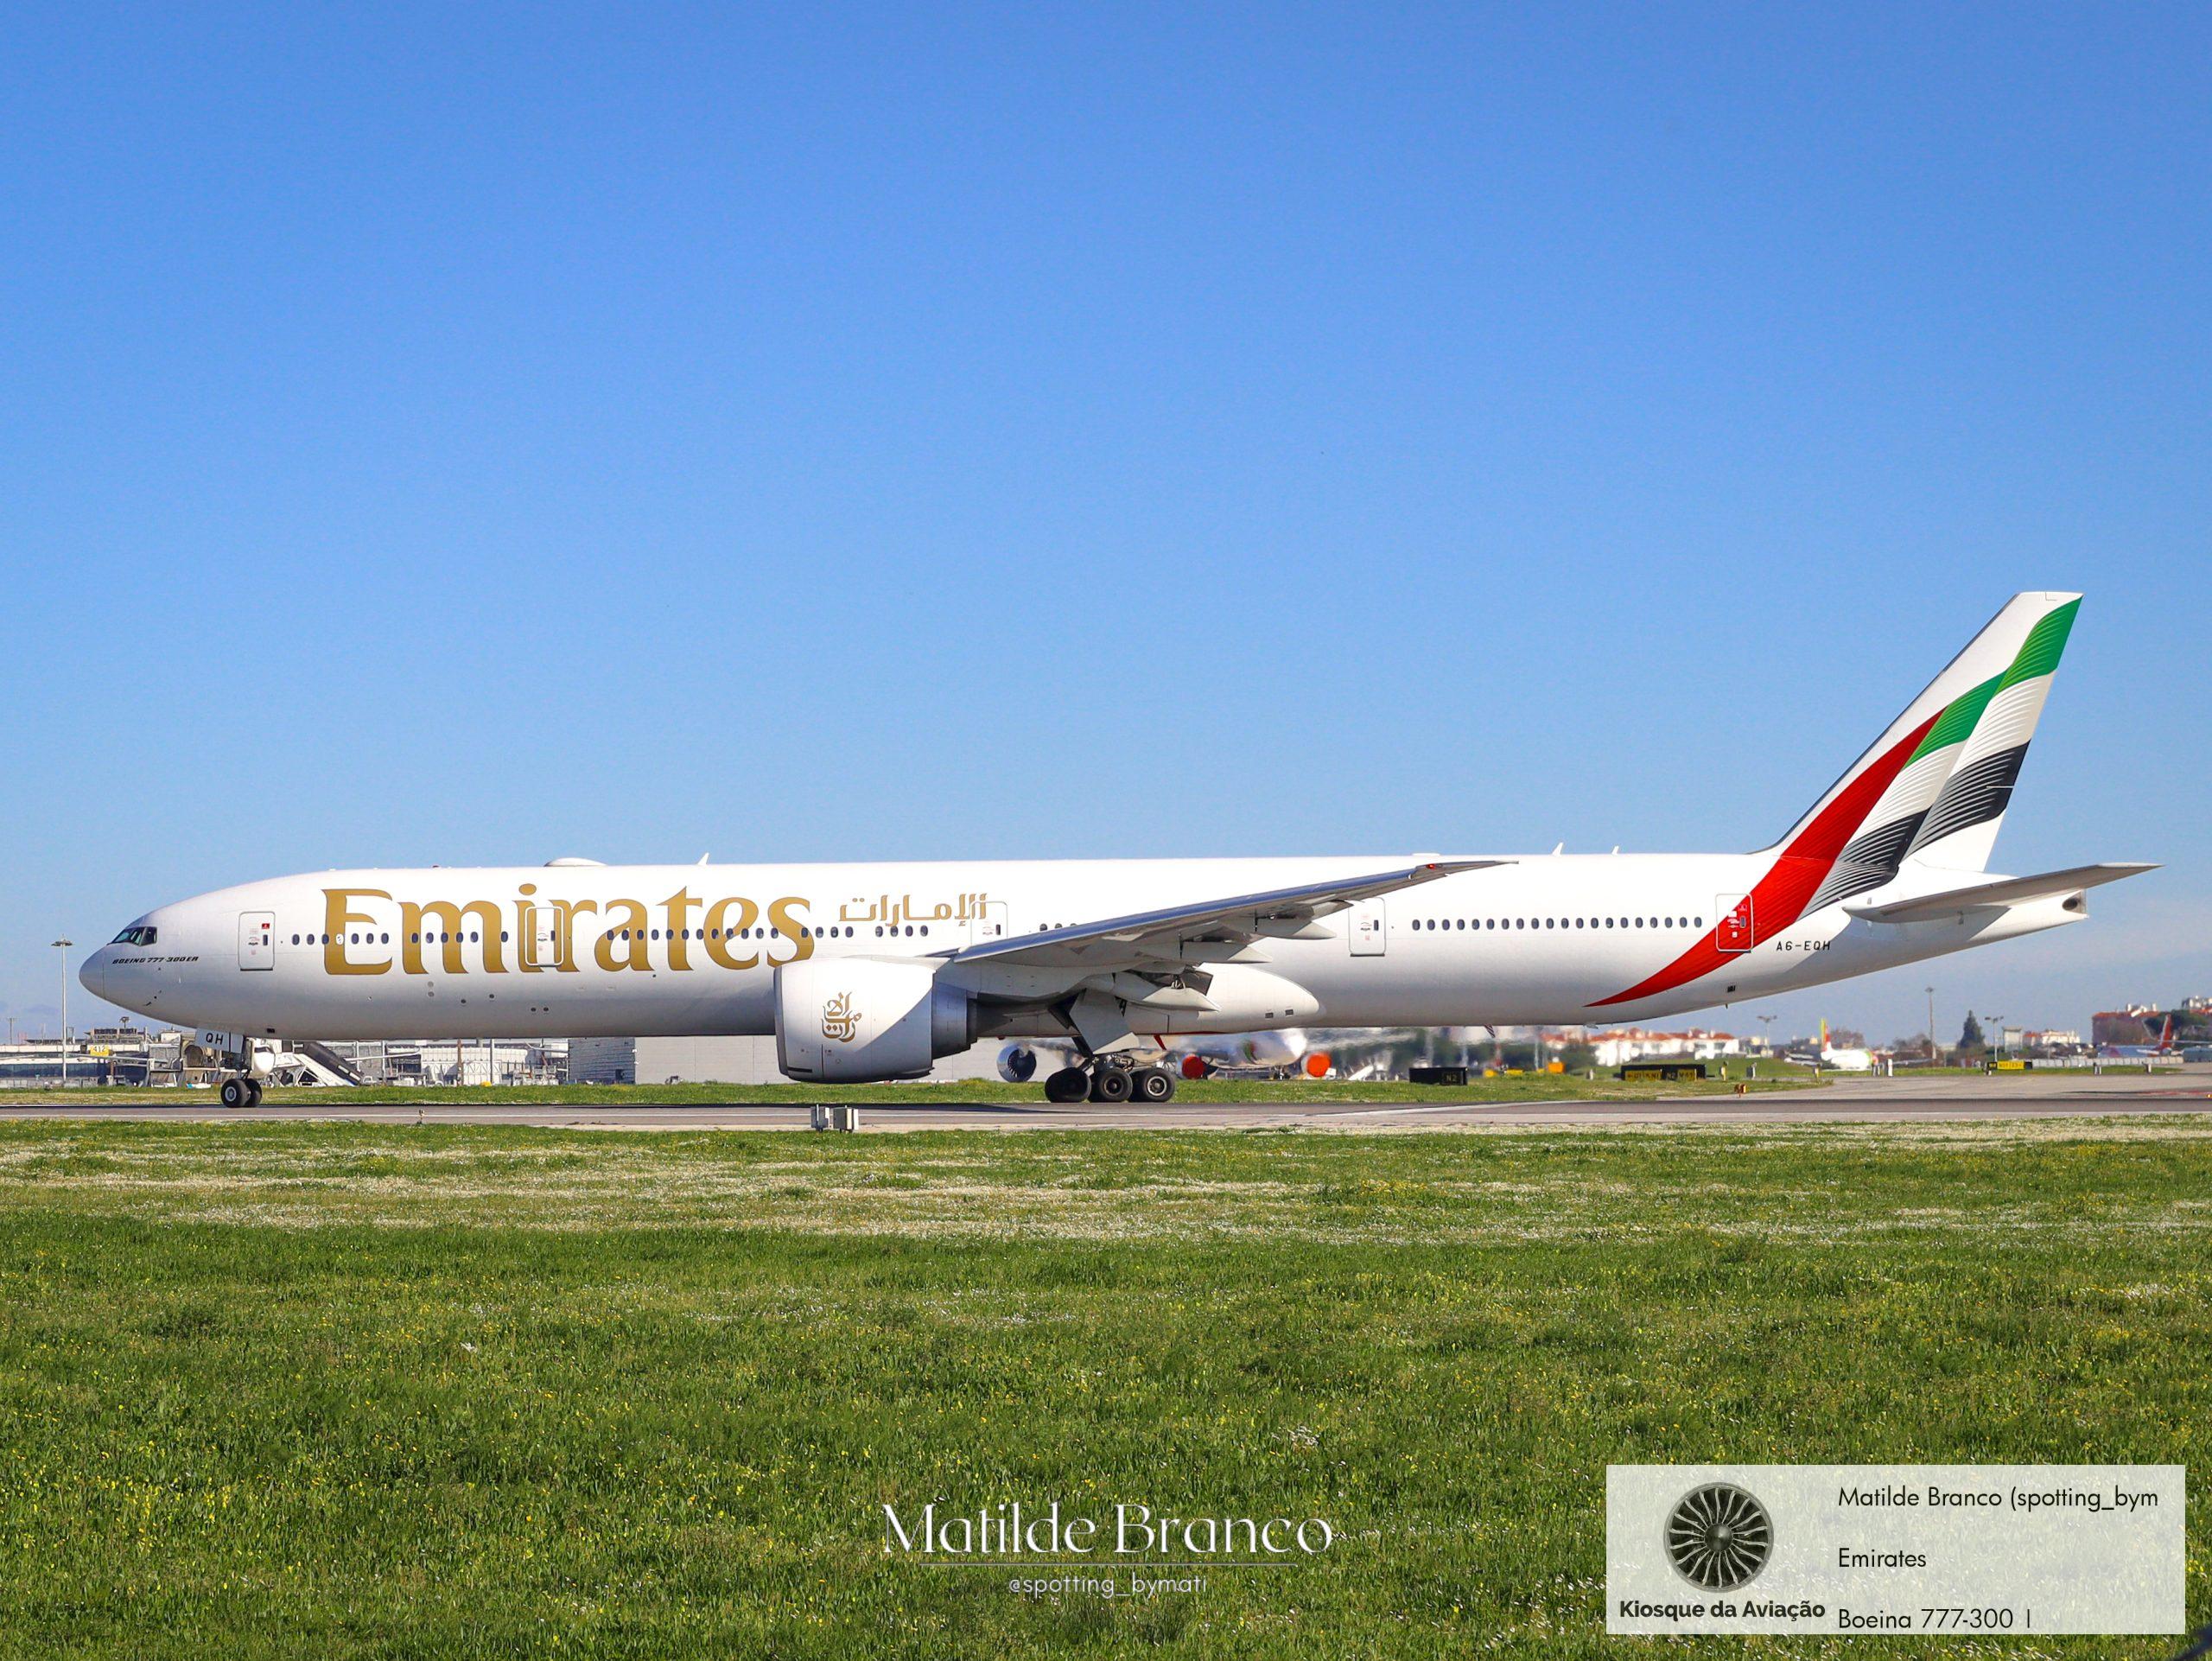 The Emirates new paint scheme 🇦🇪